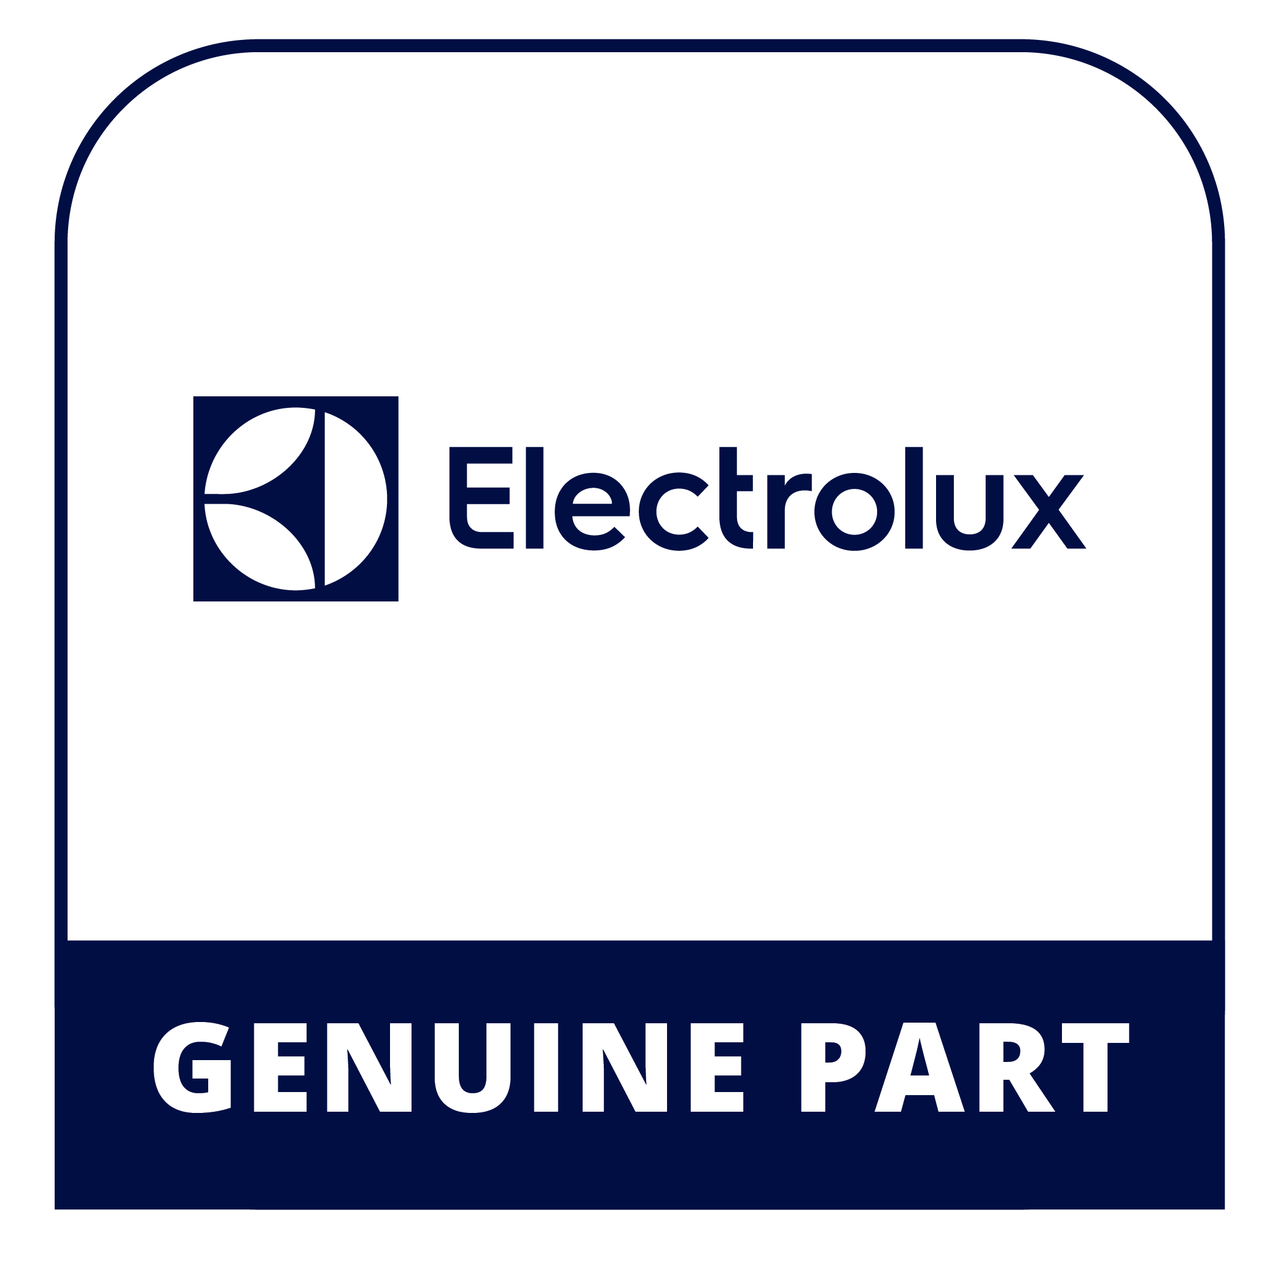 Frigidaire - Electrolux 134413300 Gasket - Genuine Electrolux Part